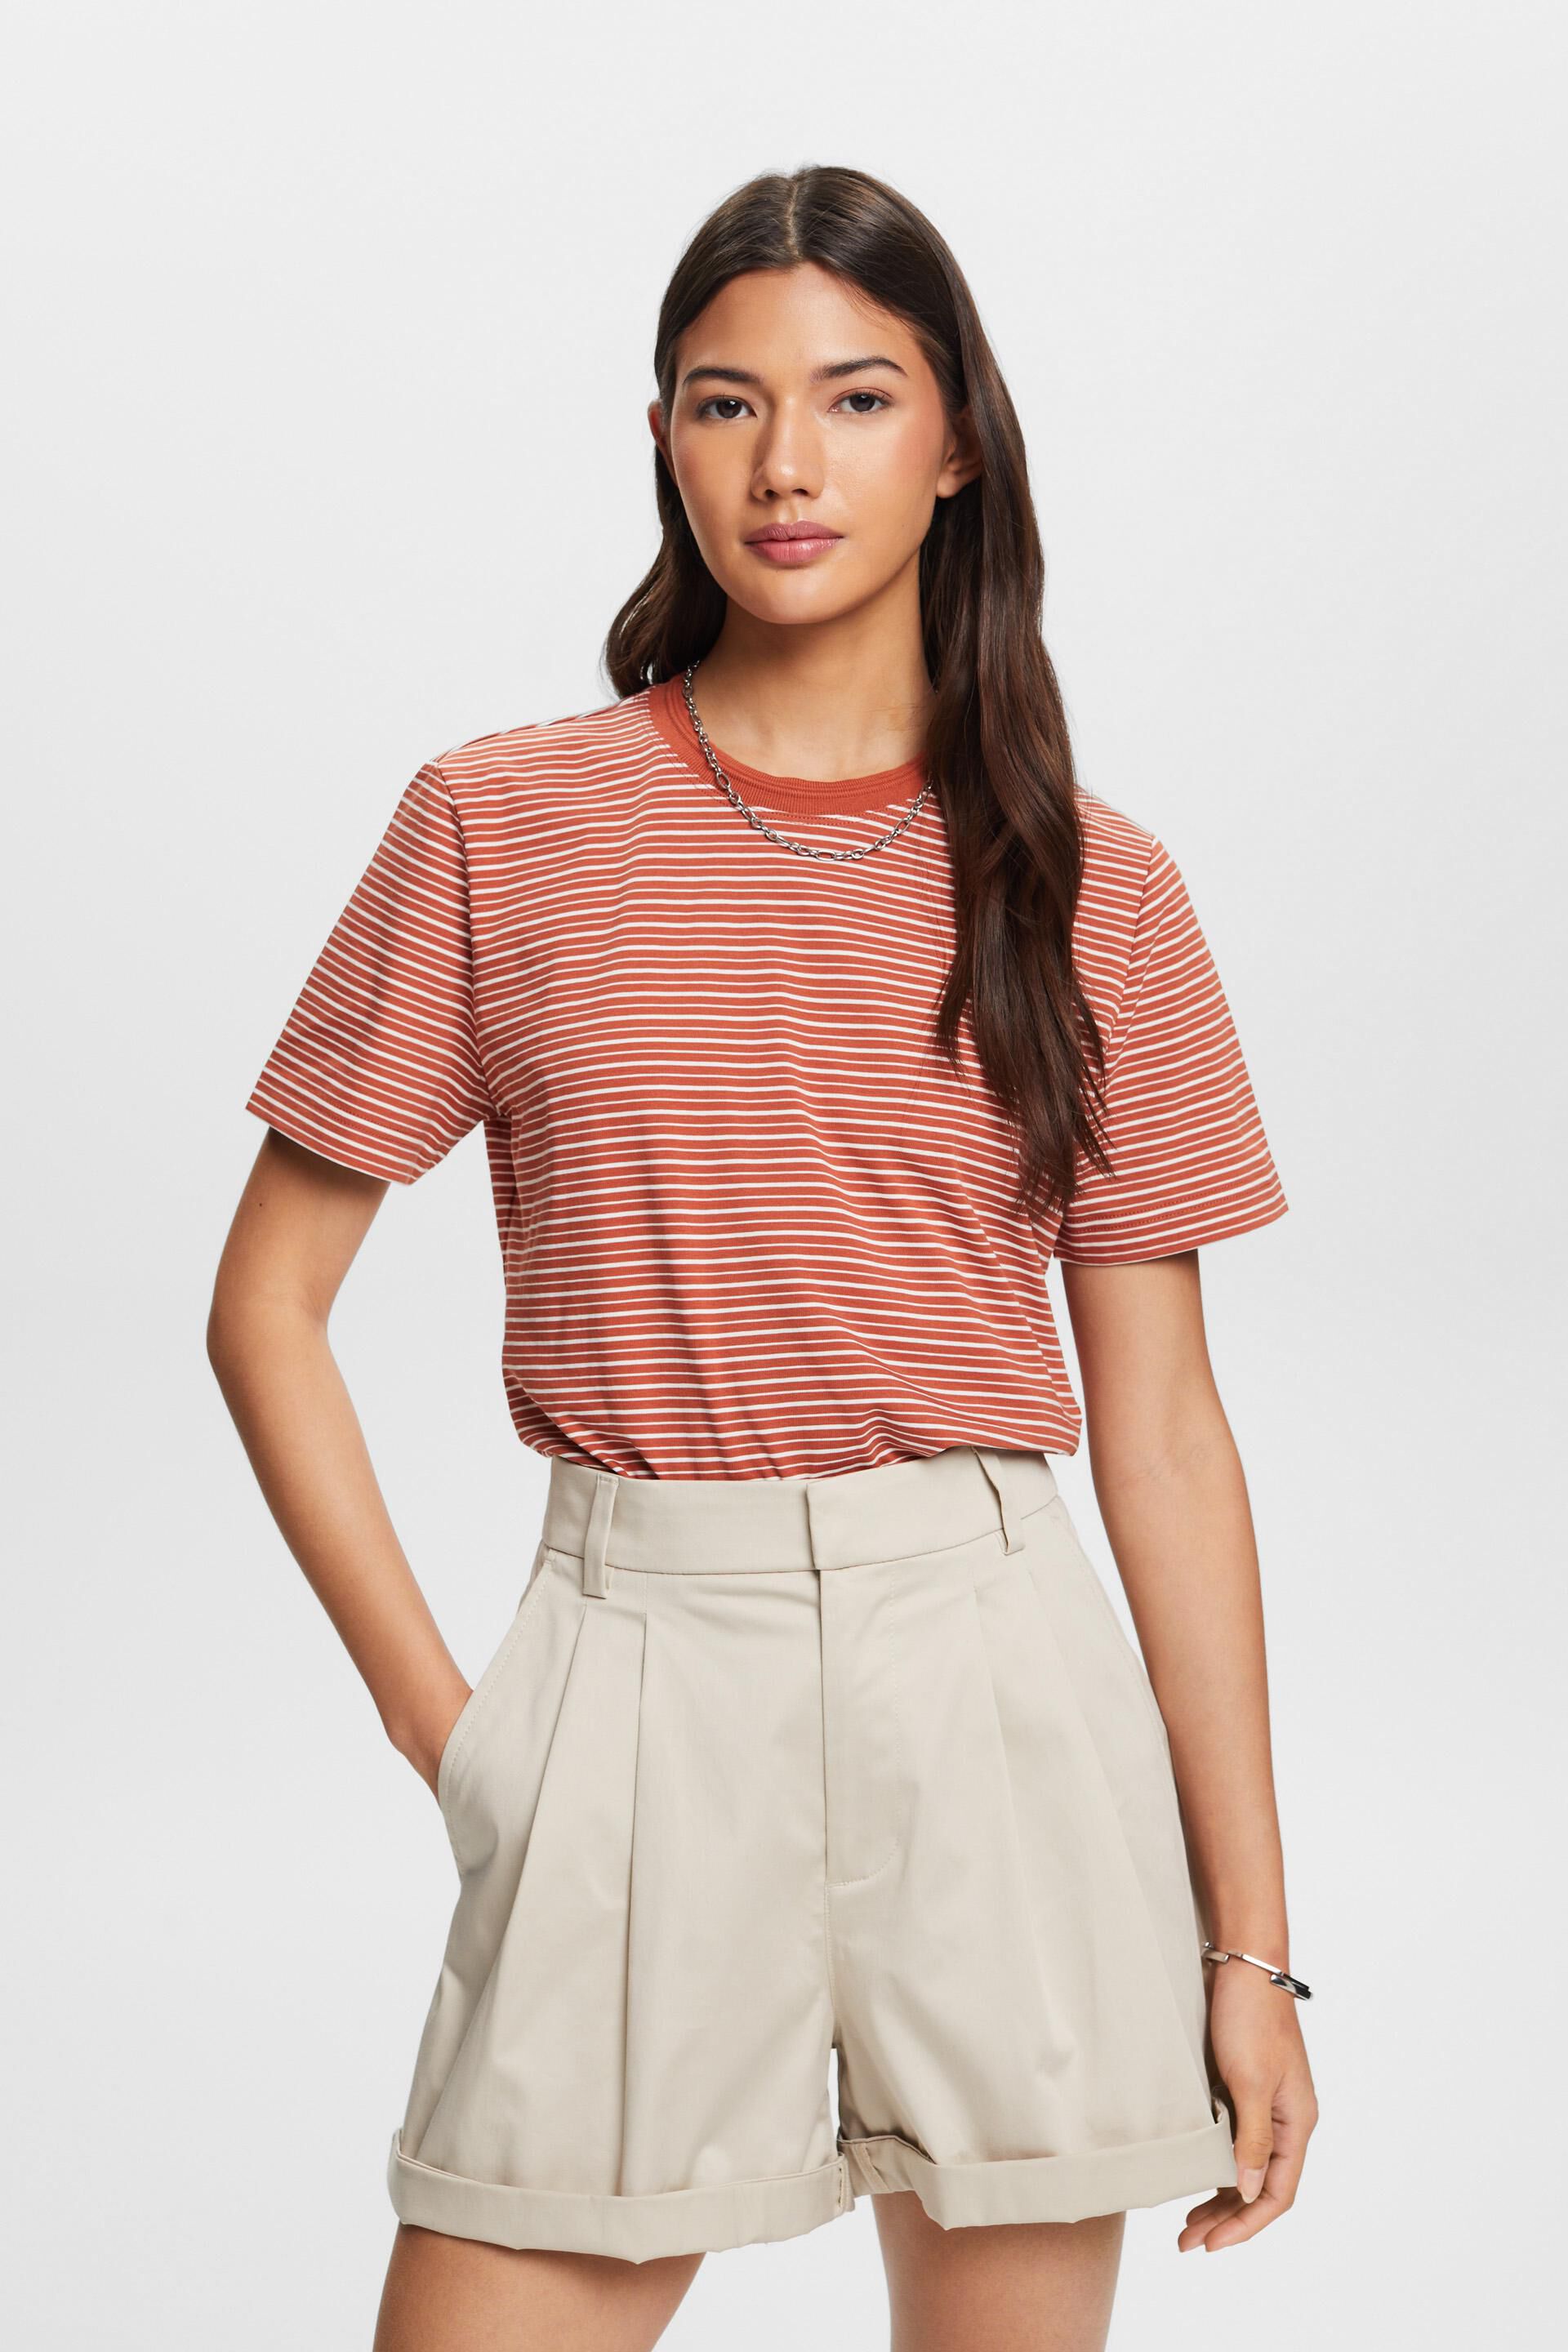 Esprit Damen Striped T-shirt, cotton 100